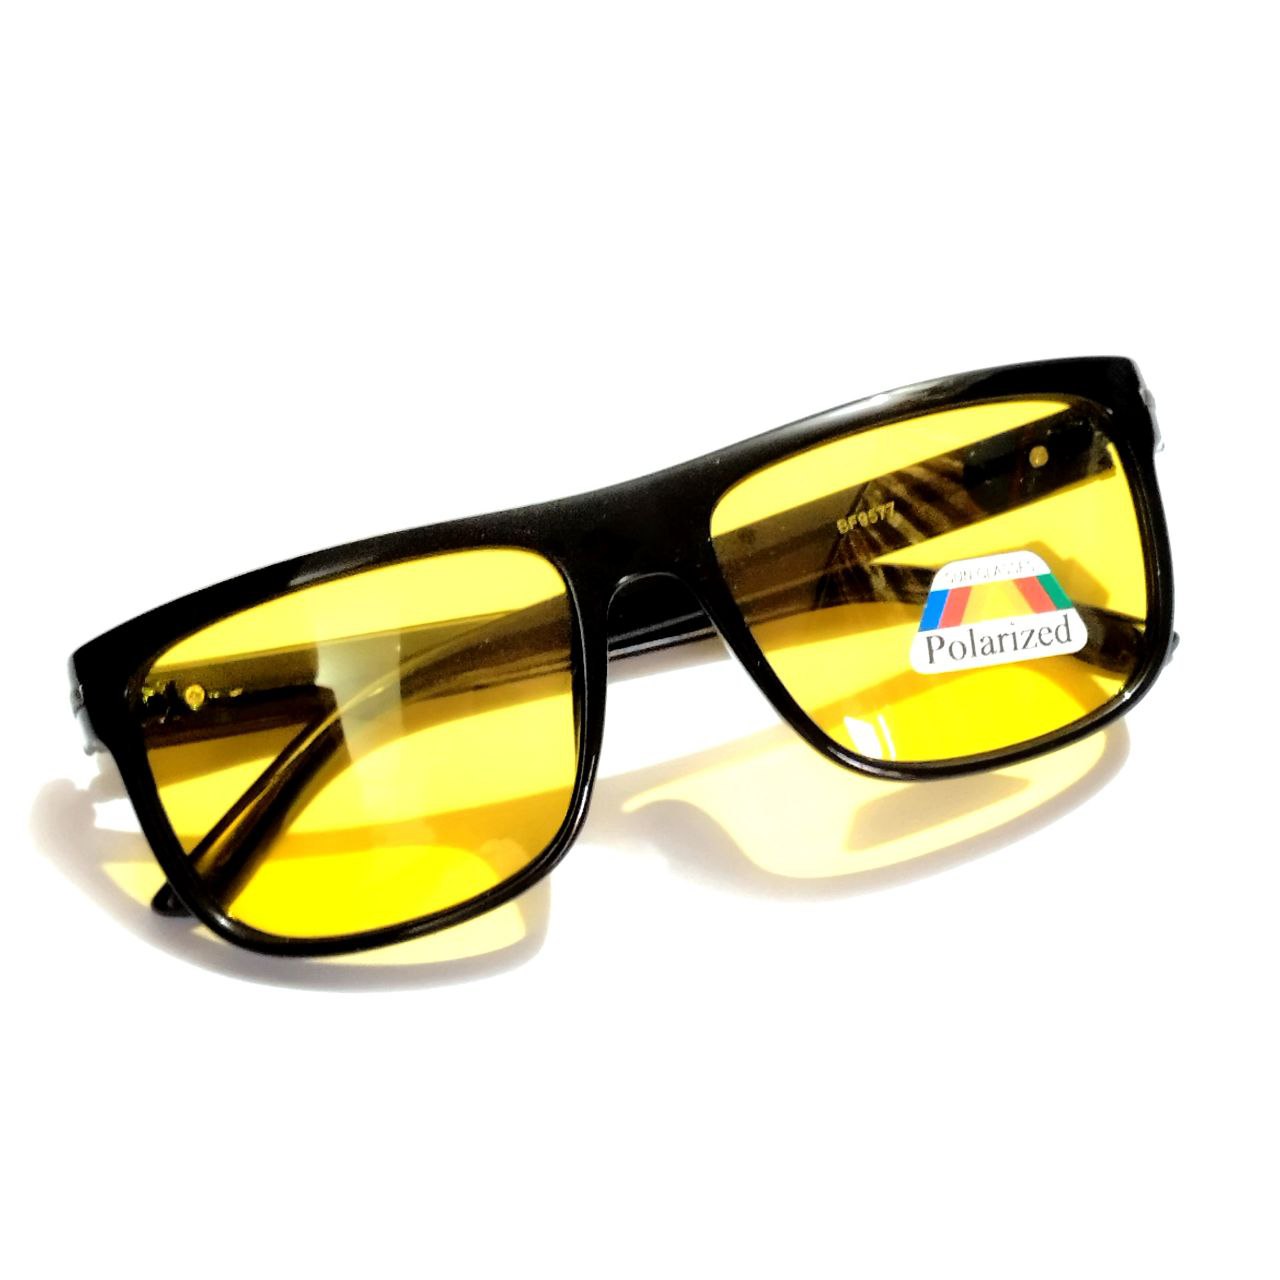 Night Driving Glasses Polarized Yellow Lens Anti Glare Vision